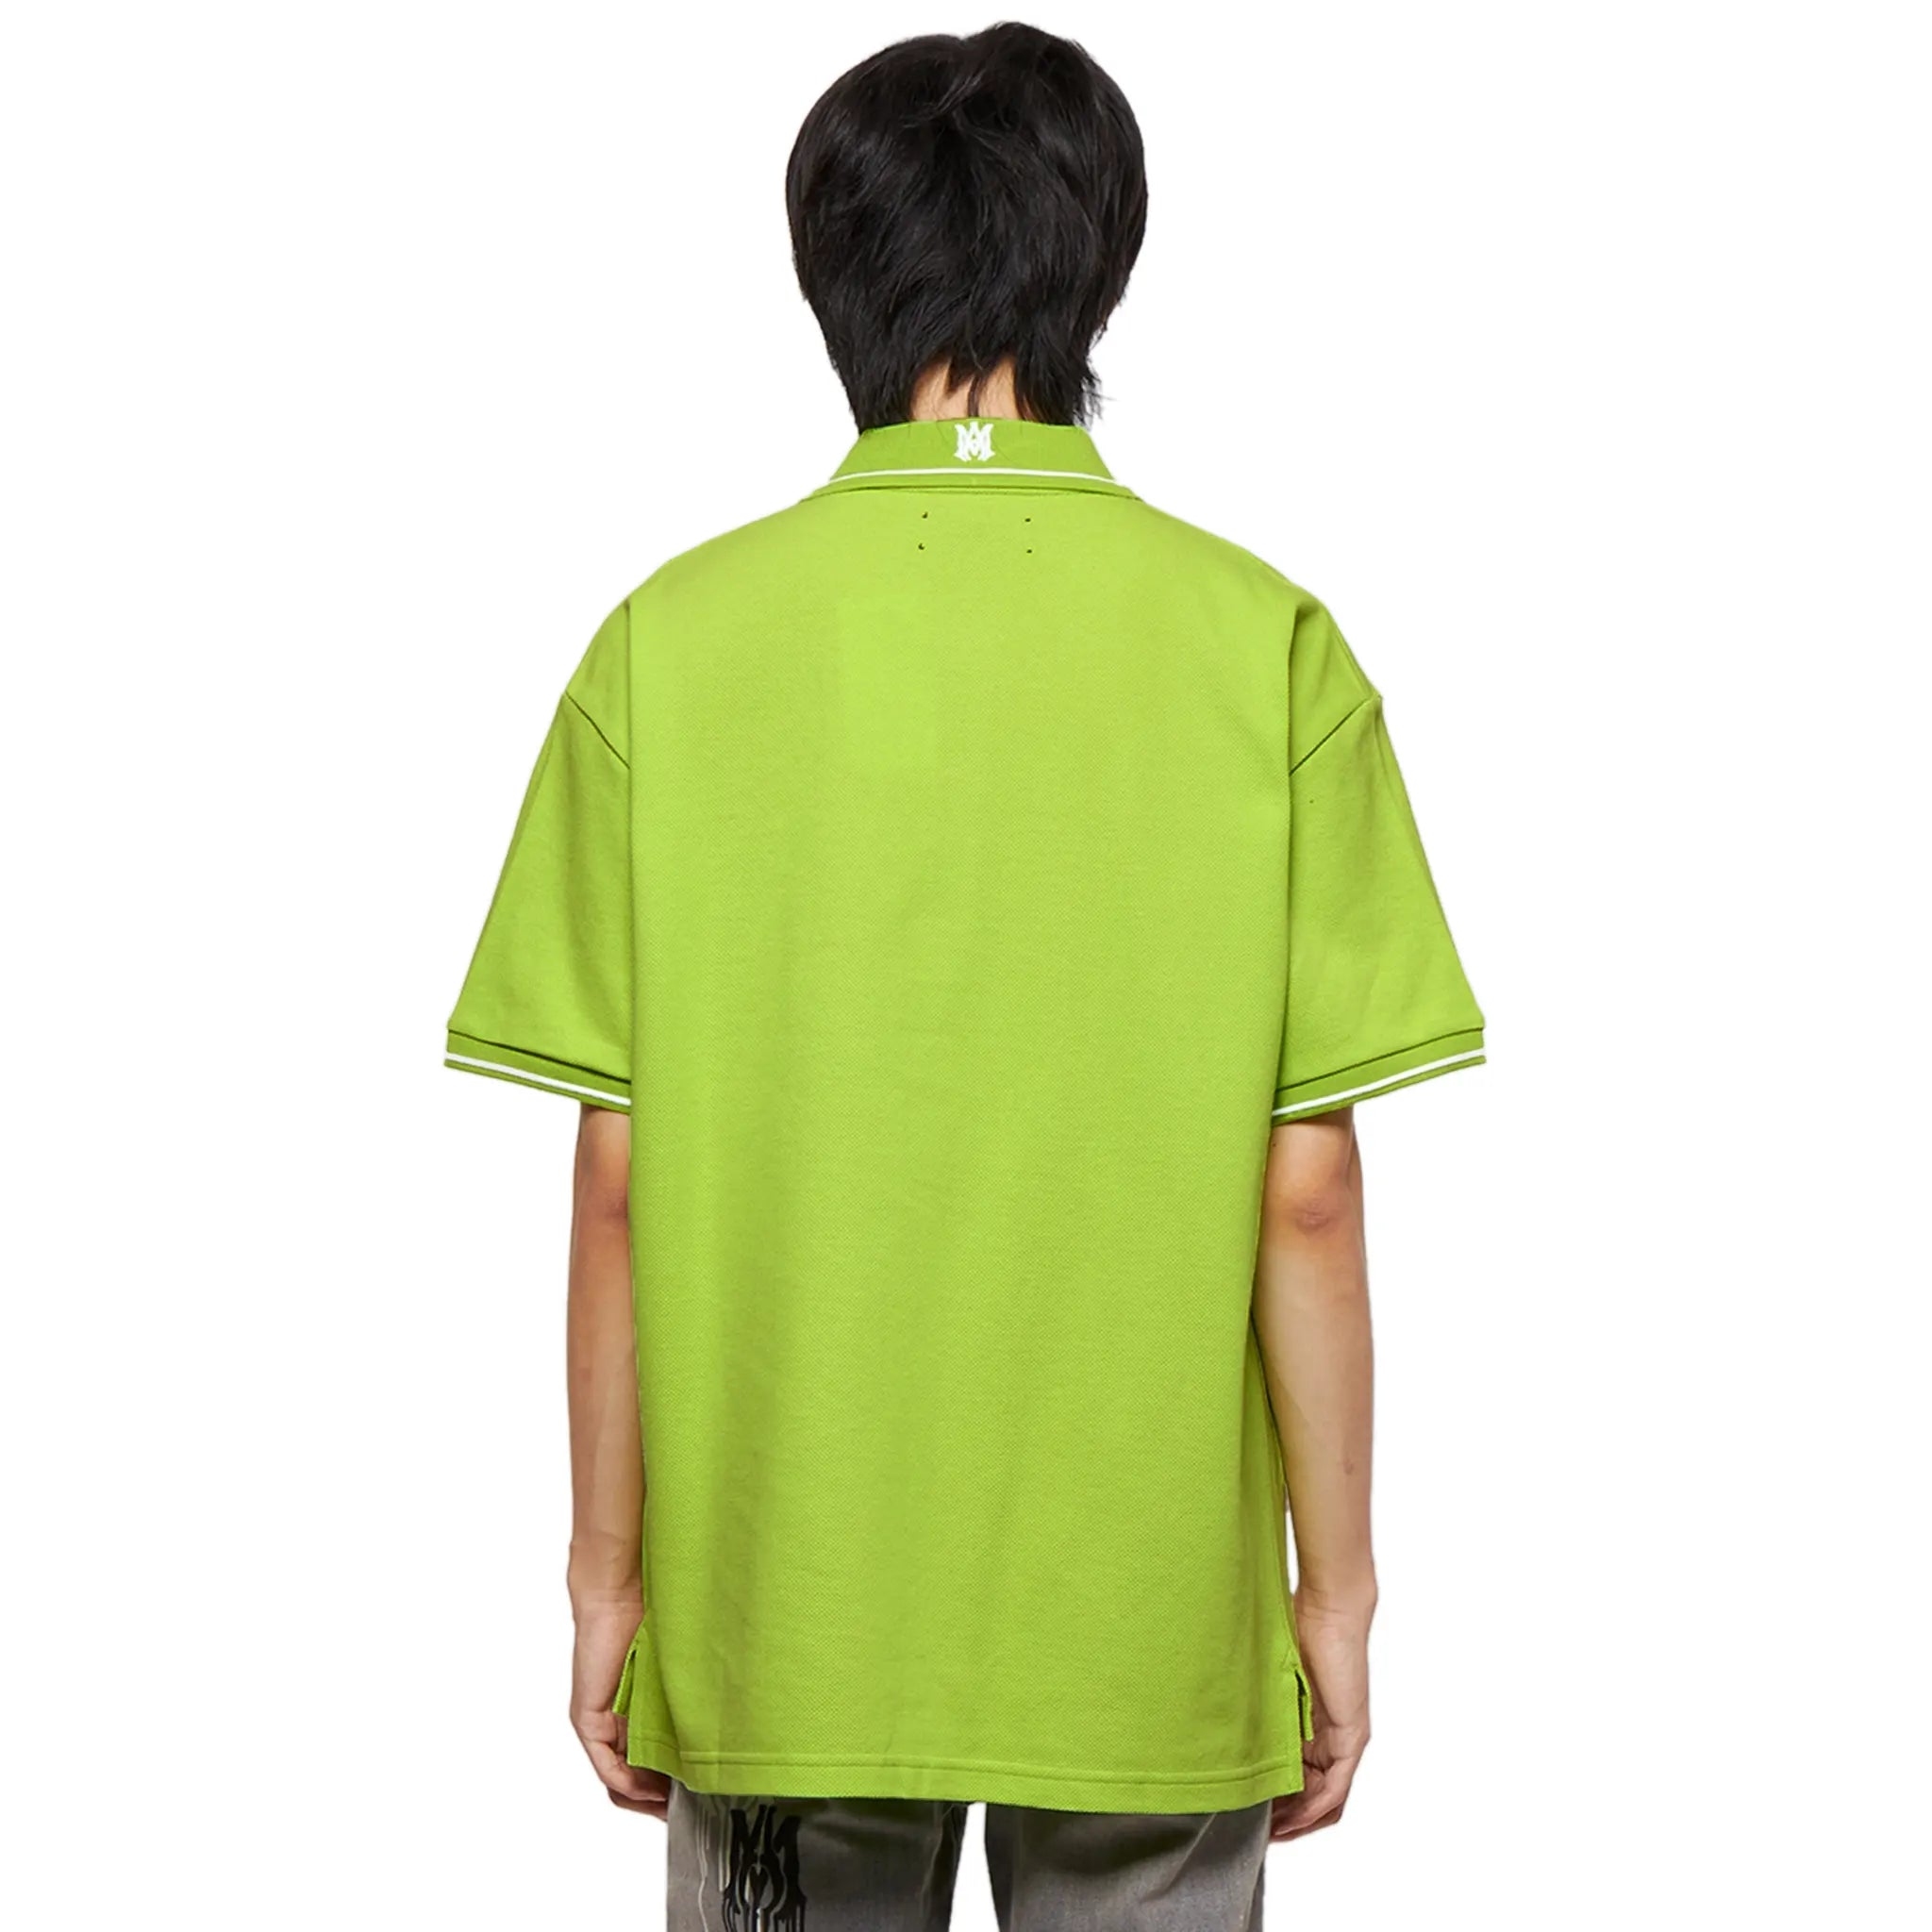 Back view of Amiri Solid Short Sleeve Green Polo Shirt PF22MSS015-360